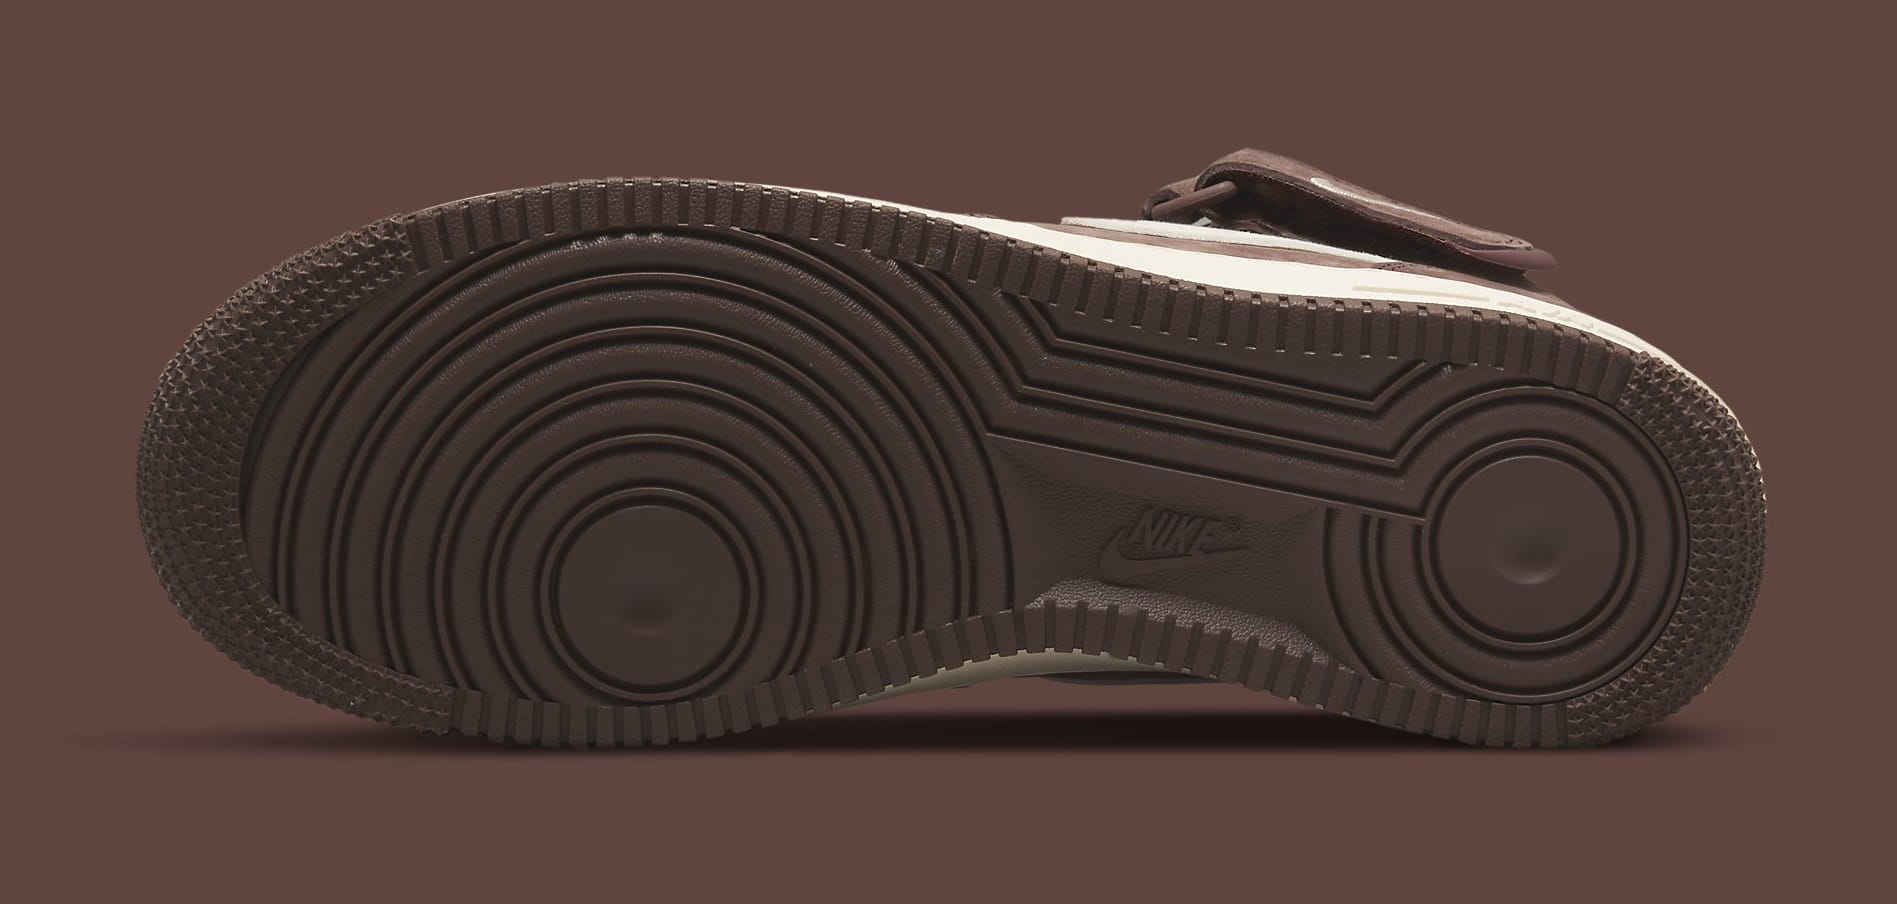 The Original 'Chocolate' Nike Air Force 1 Is Returning Next Week